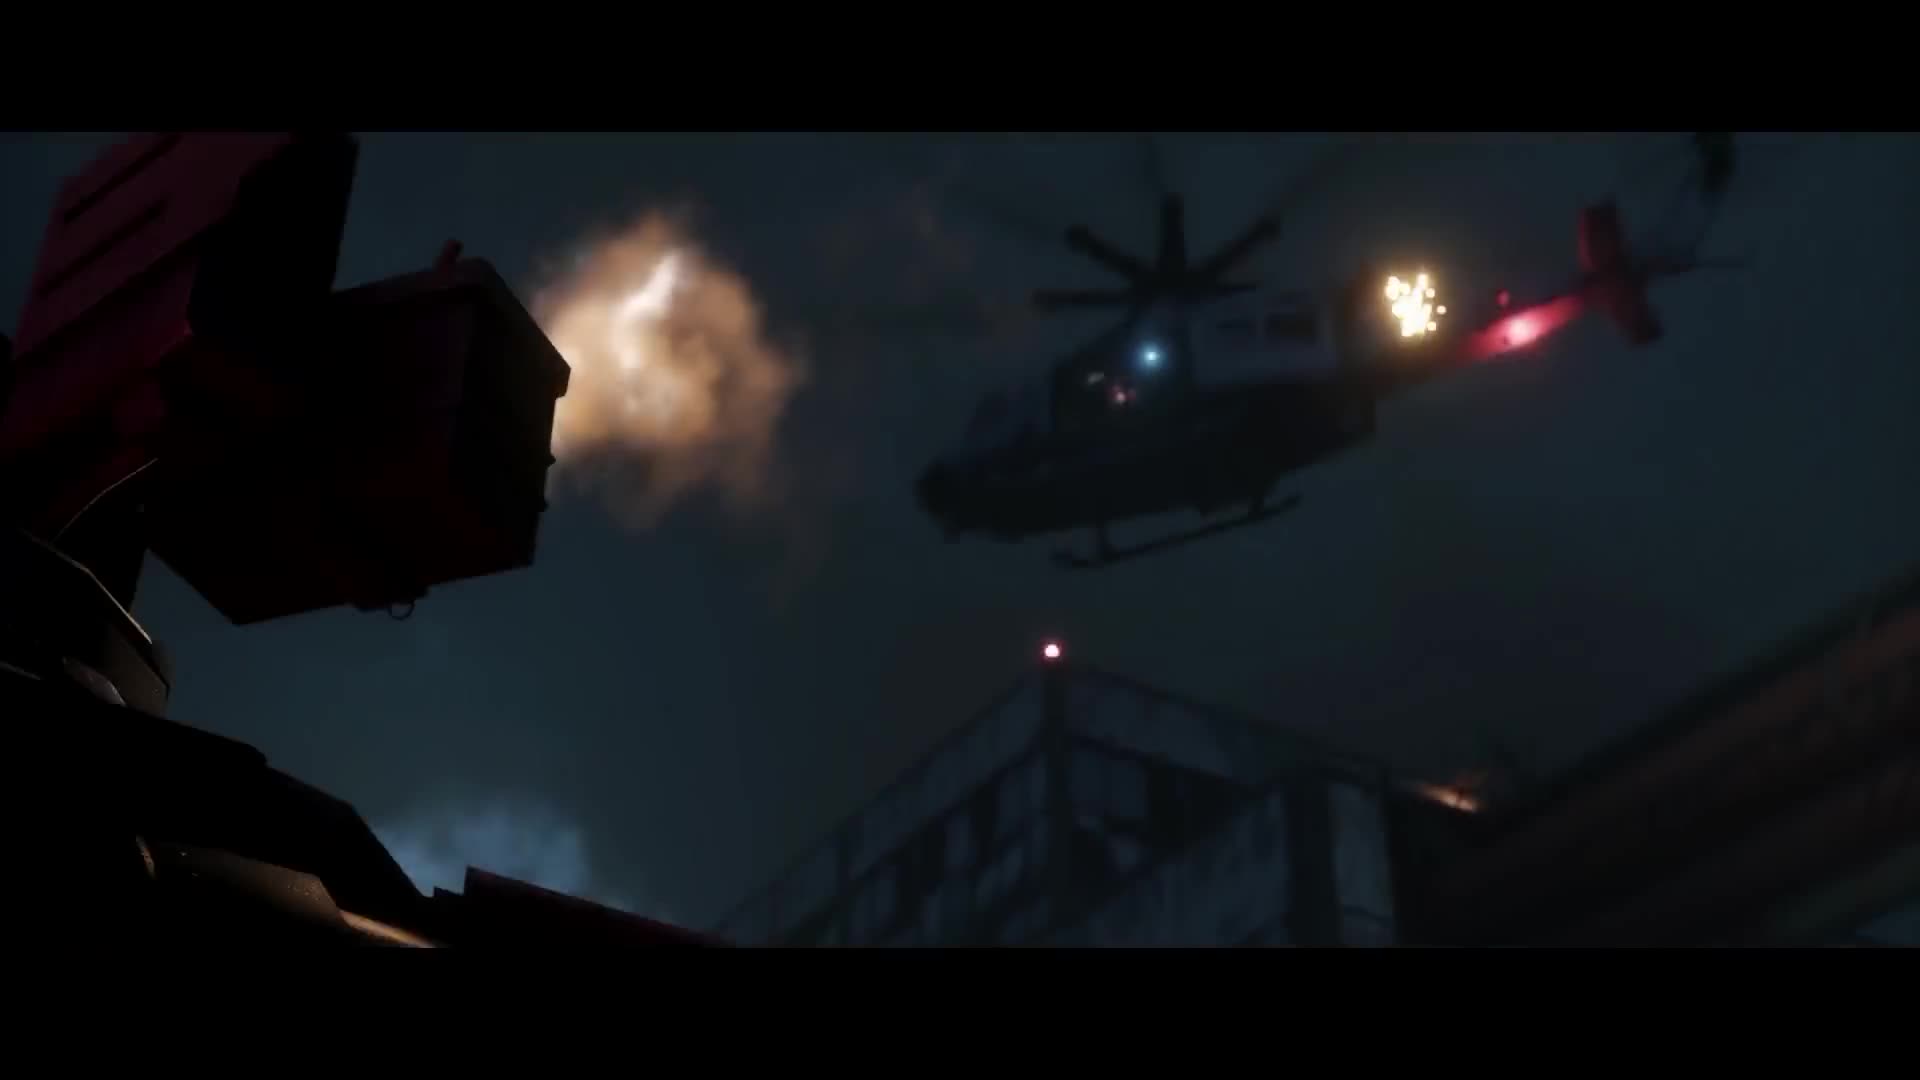 Battlefield 4 - Night Operations DLC Trailer